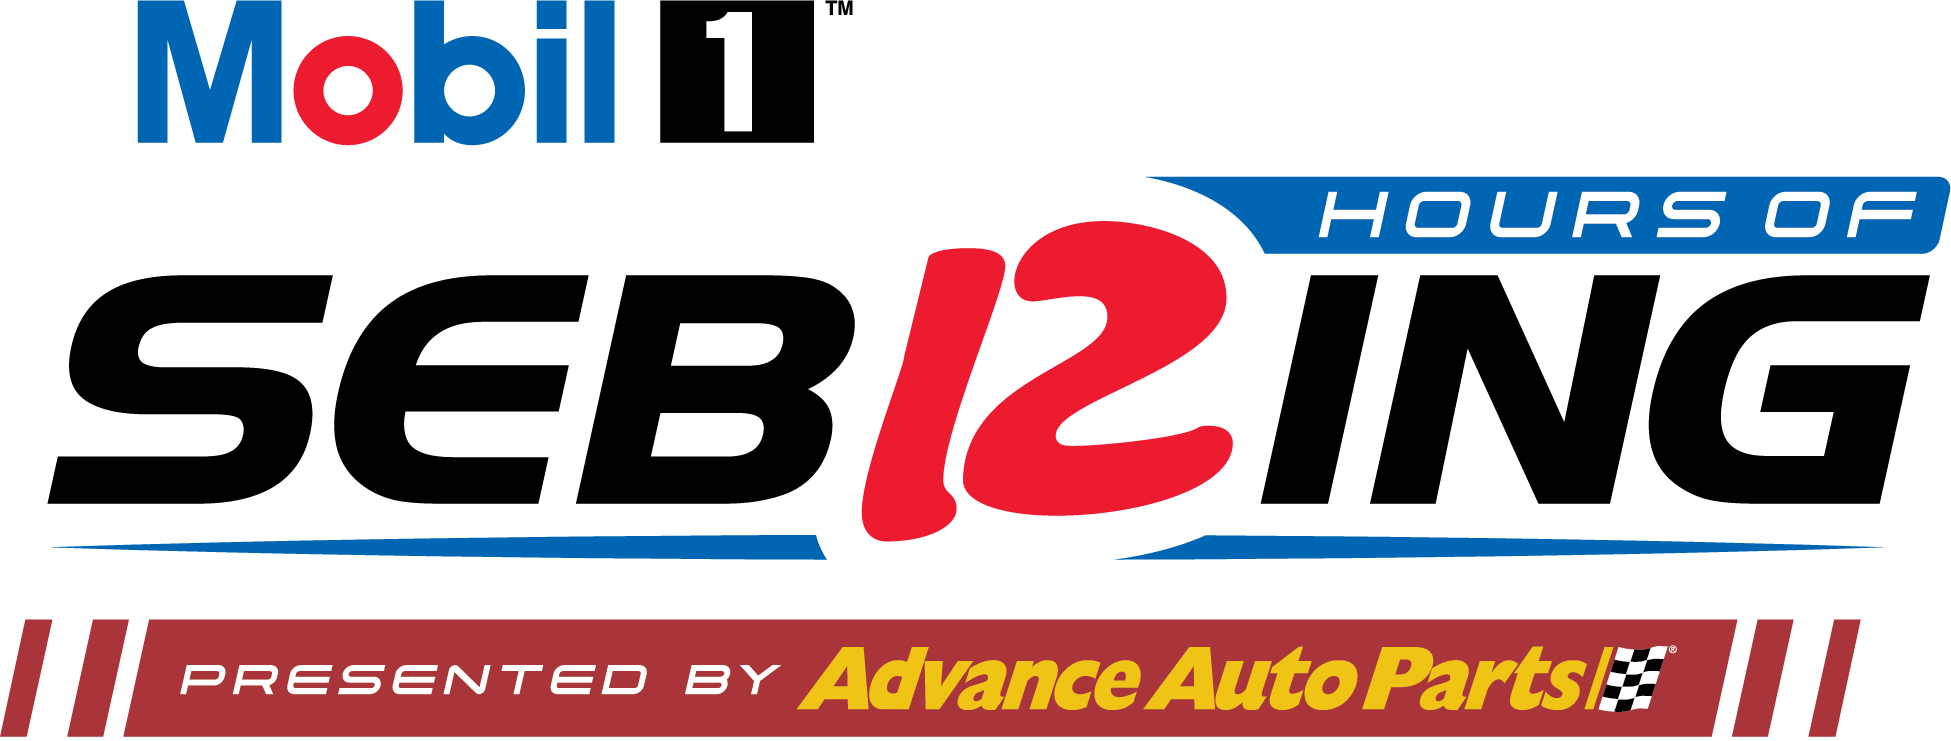 Mobil 1 and Advanced Auto Parts logo